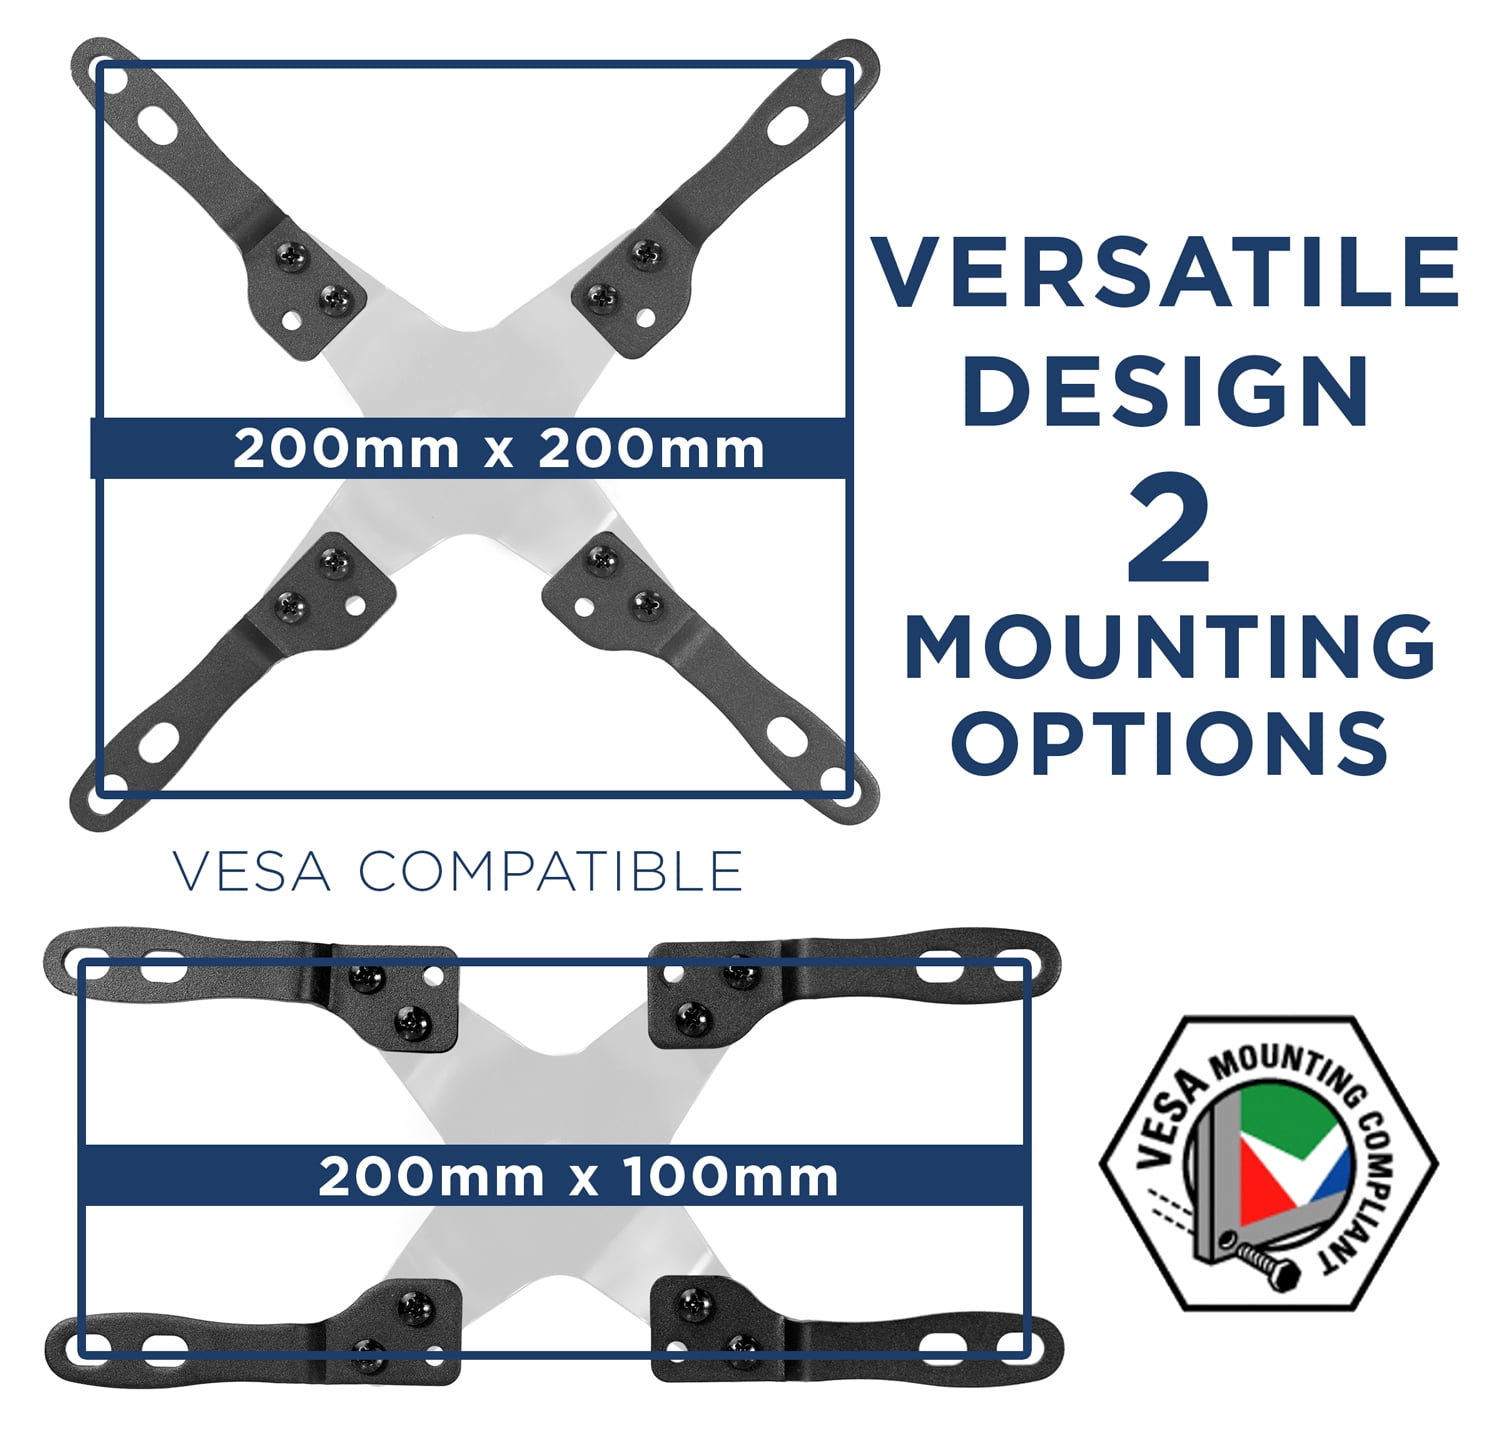 Husky Mounts Universal VESA Adapter Extends VESA up to 200x200mm